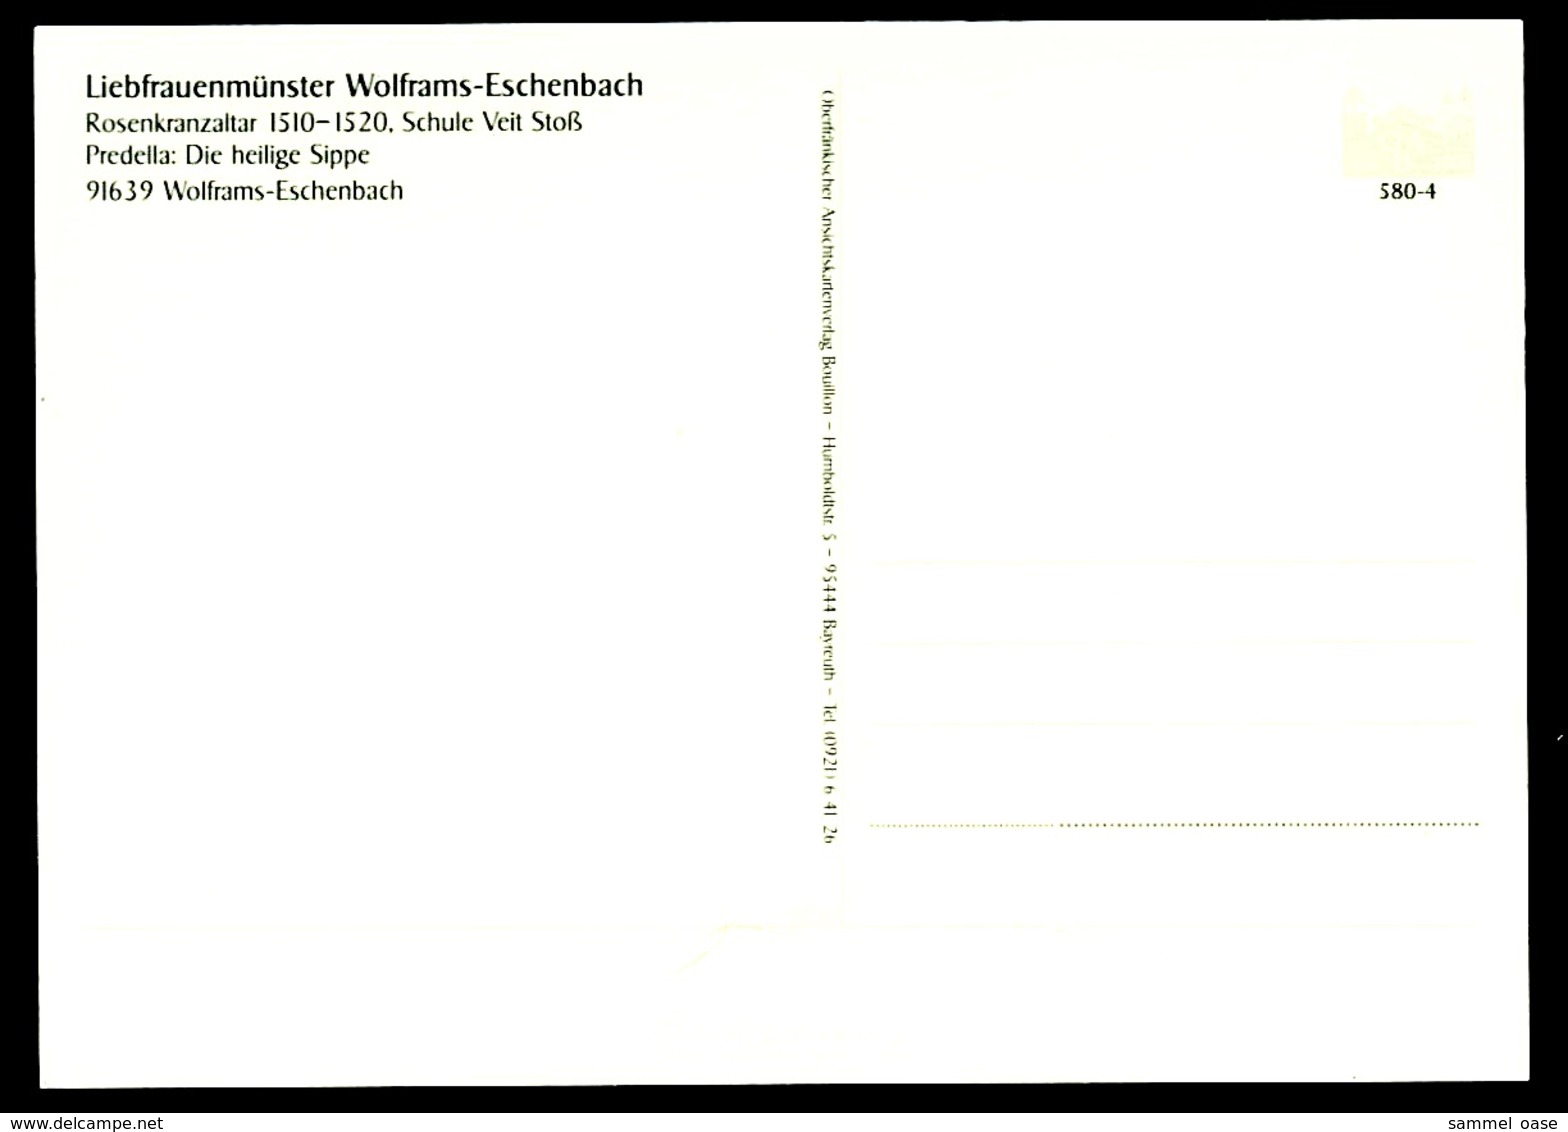 Wolframs-Eschenbach  -  Liebfrauenmünster  -  Rosenkranzaltar  -  Ansichtskarte Ca. 1980    (12214) - Ansbach